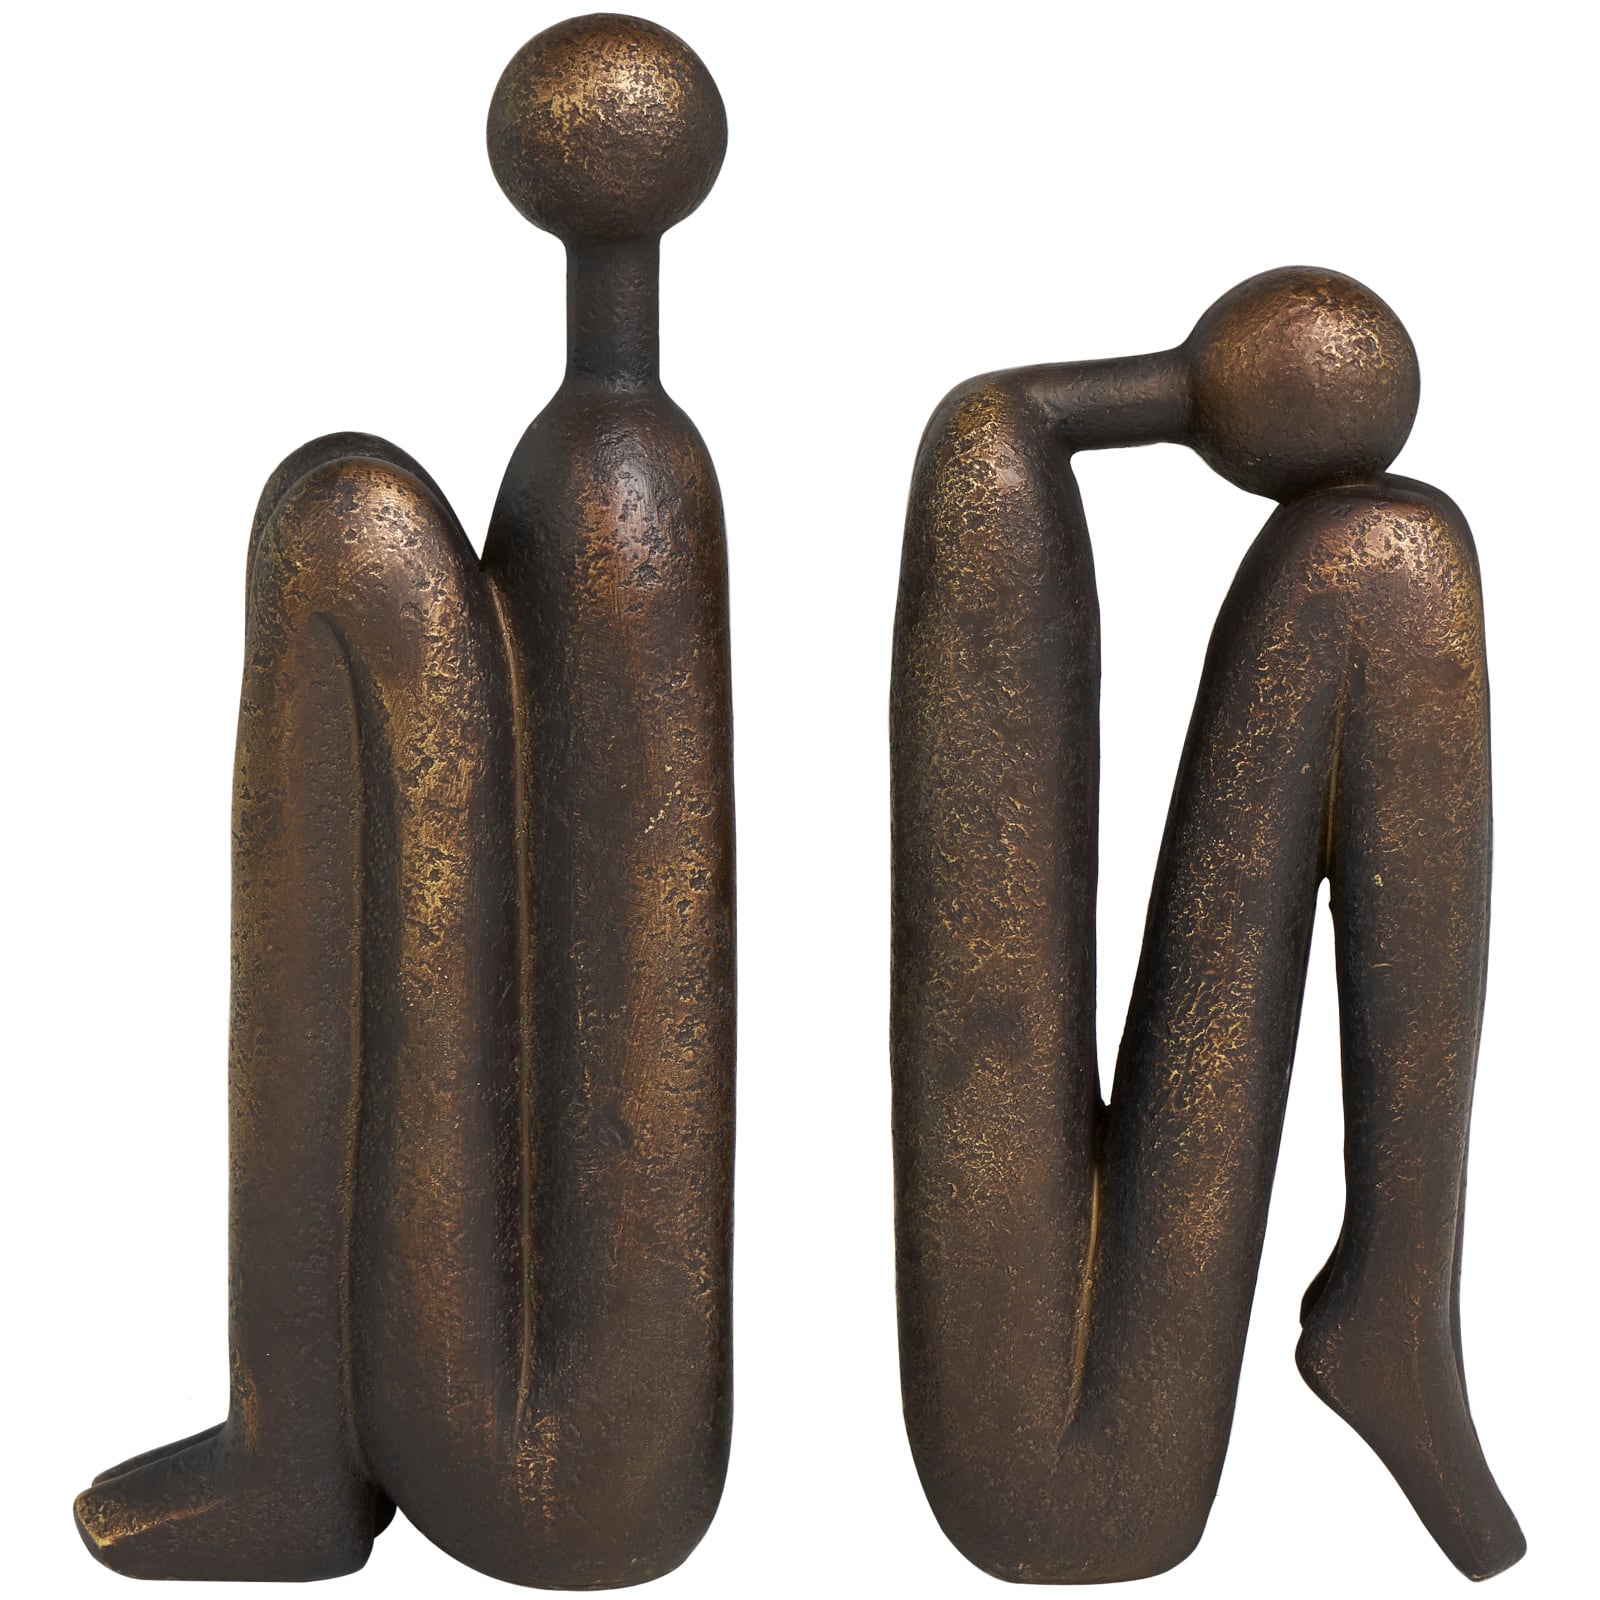 The Novogratz Distressed Bronze Sitting Figures Bookend Set